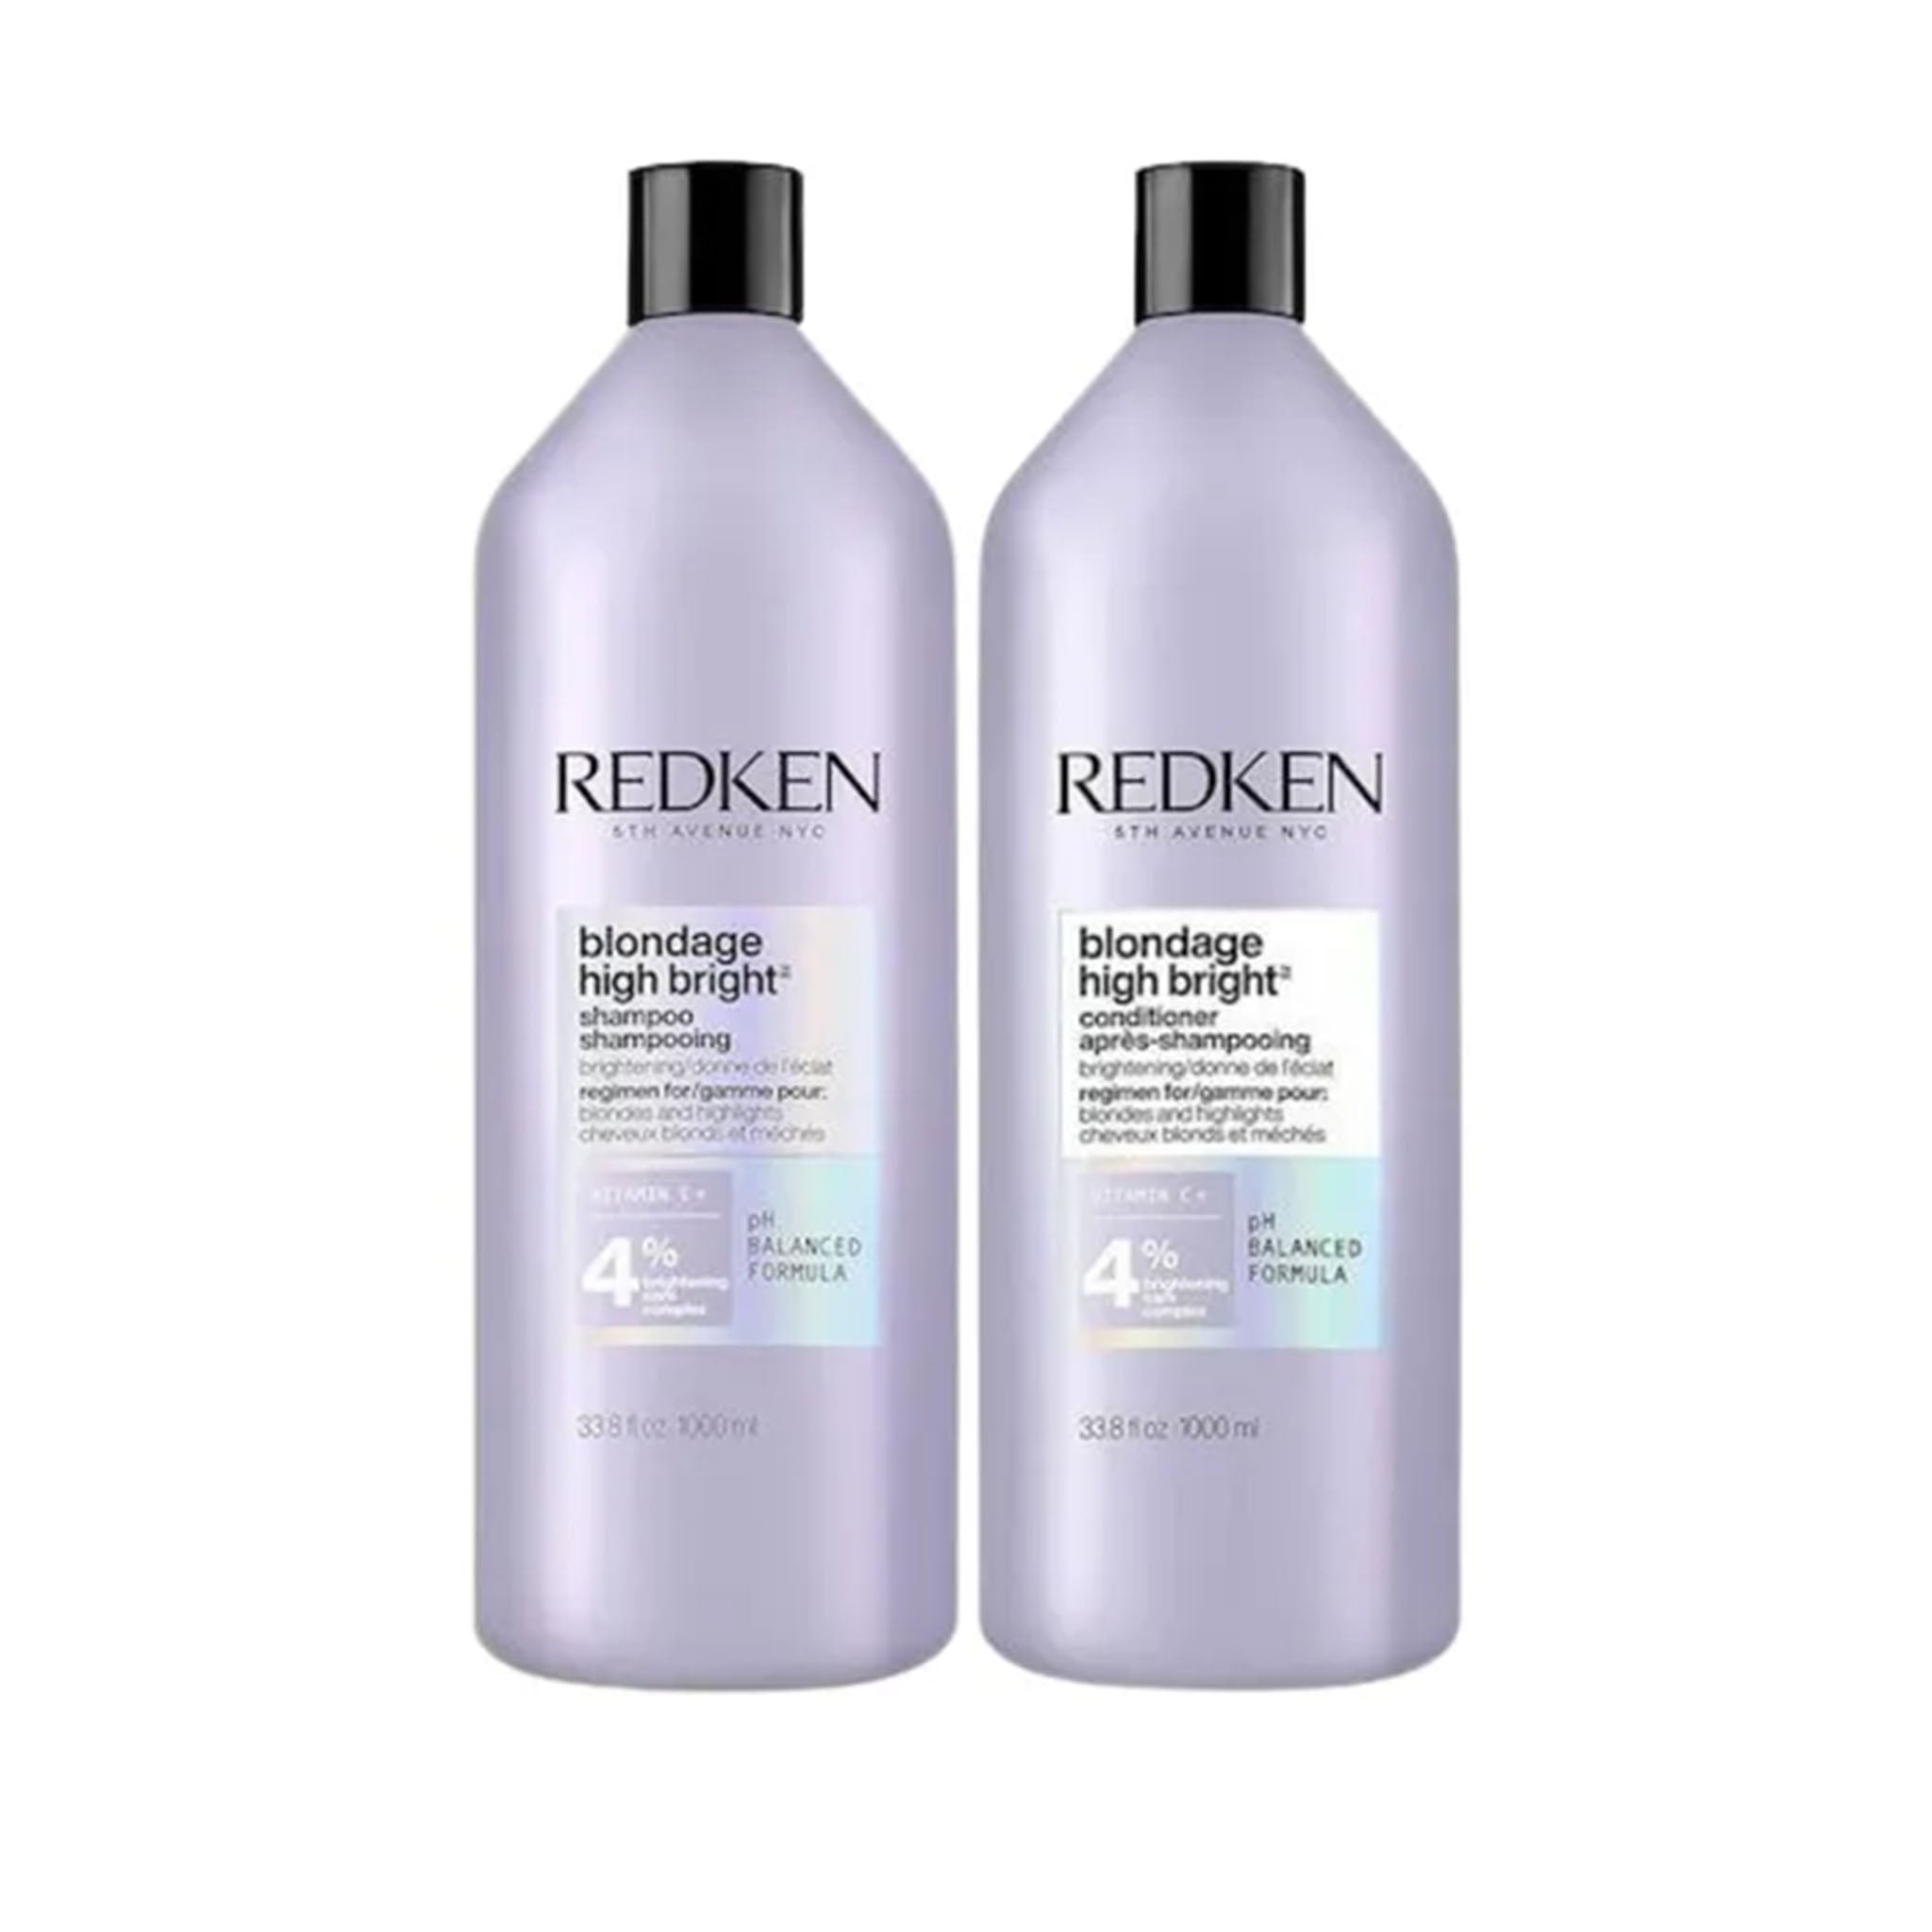 Redken. Shampoing Blondage High Bright - 1000ml - Concept C. Shop